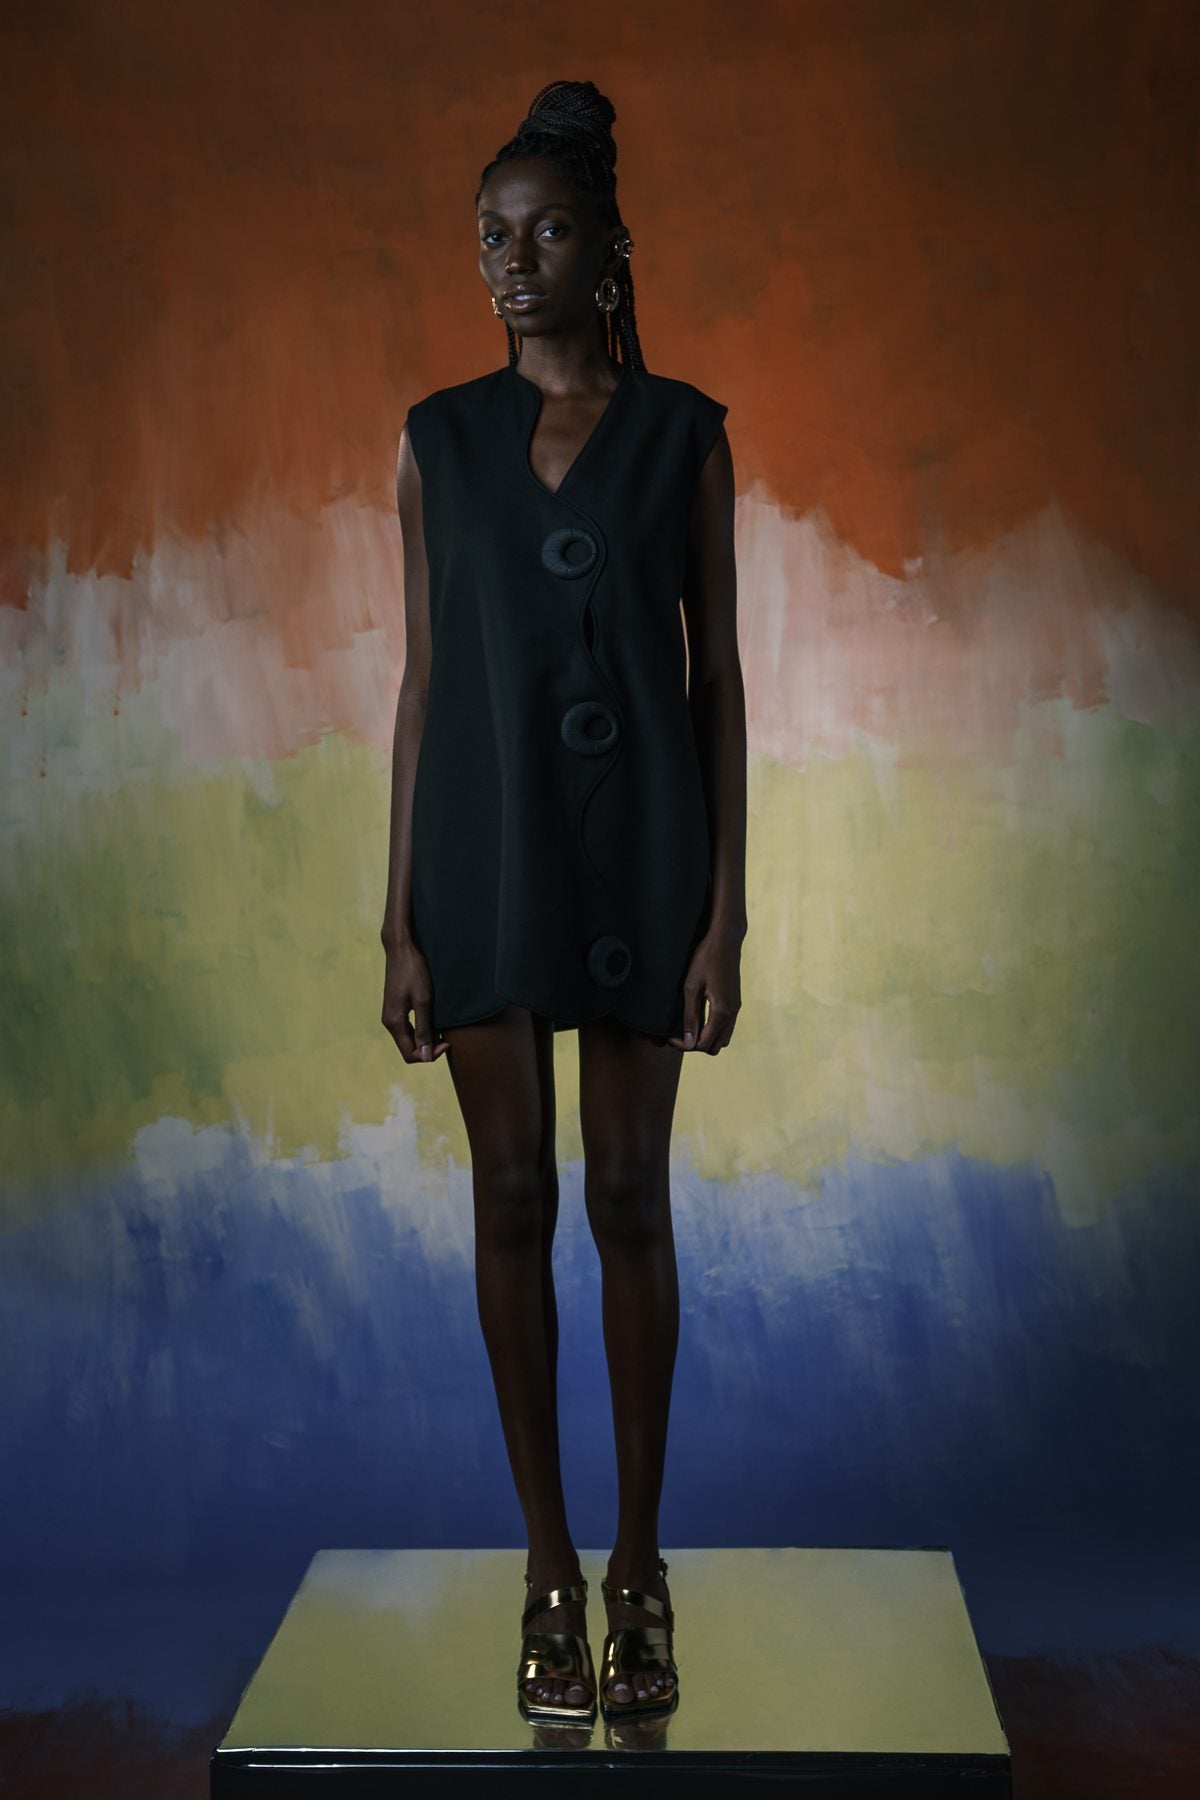 Irregular Sleeveless Black Dress - Shantall Lacayo